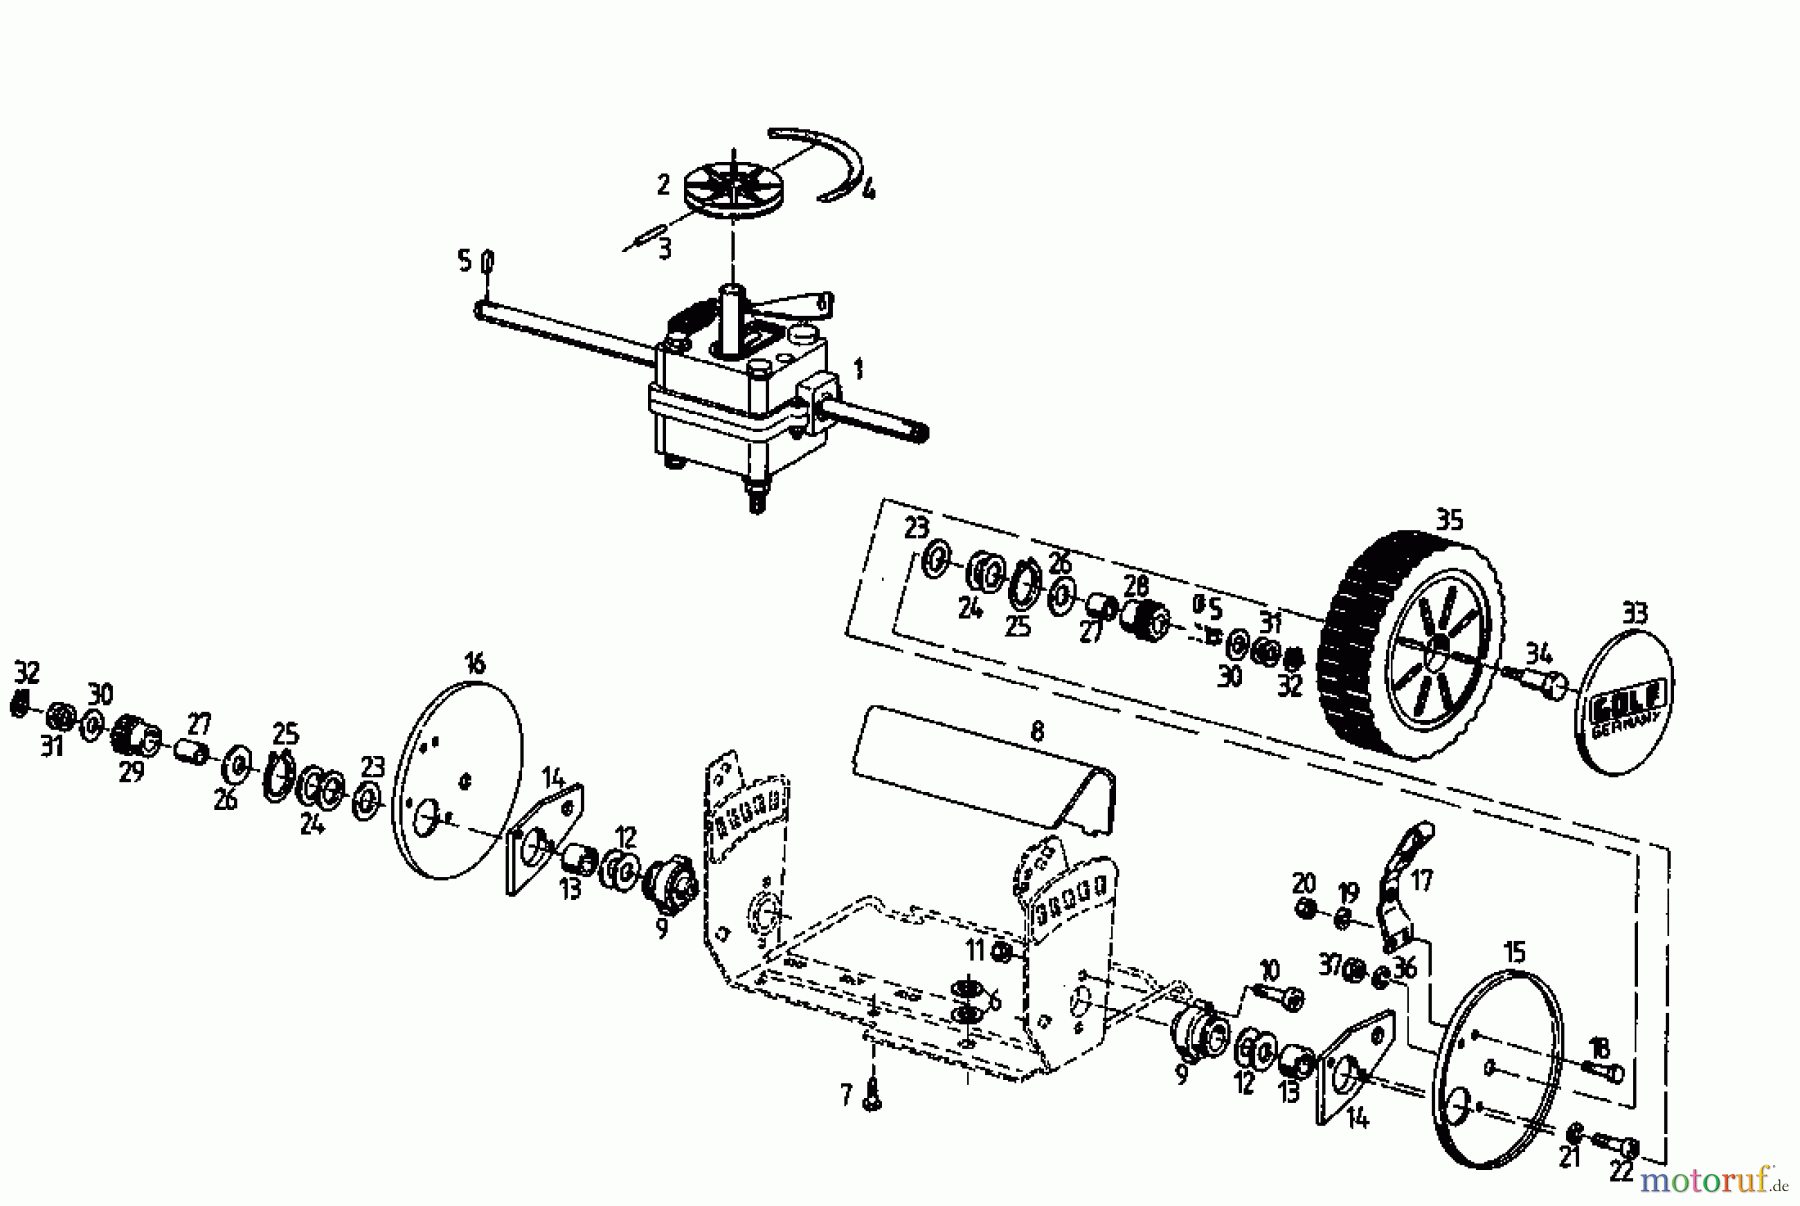  Golf Petrol mower self propelled BRL 04033.01  (1995) Gearbox, Wheels, Cutting hight adjustment